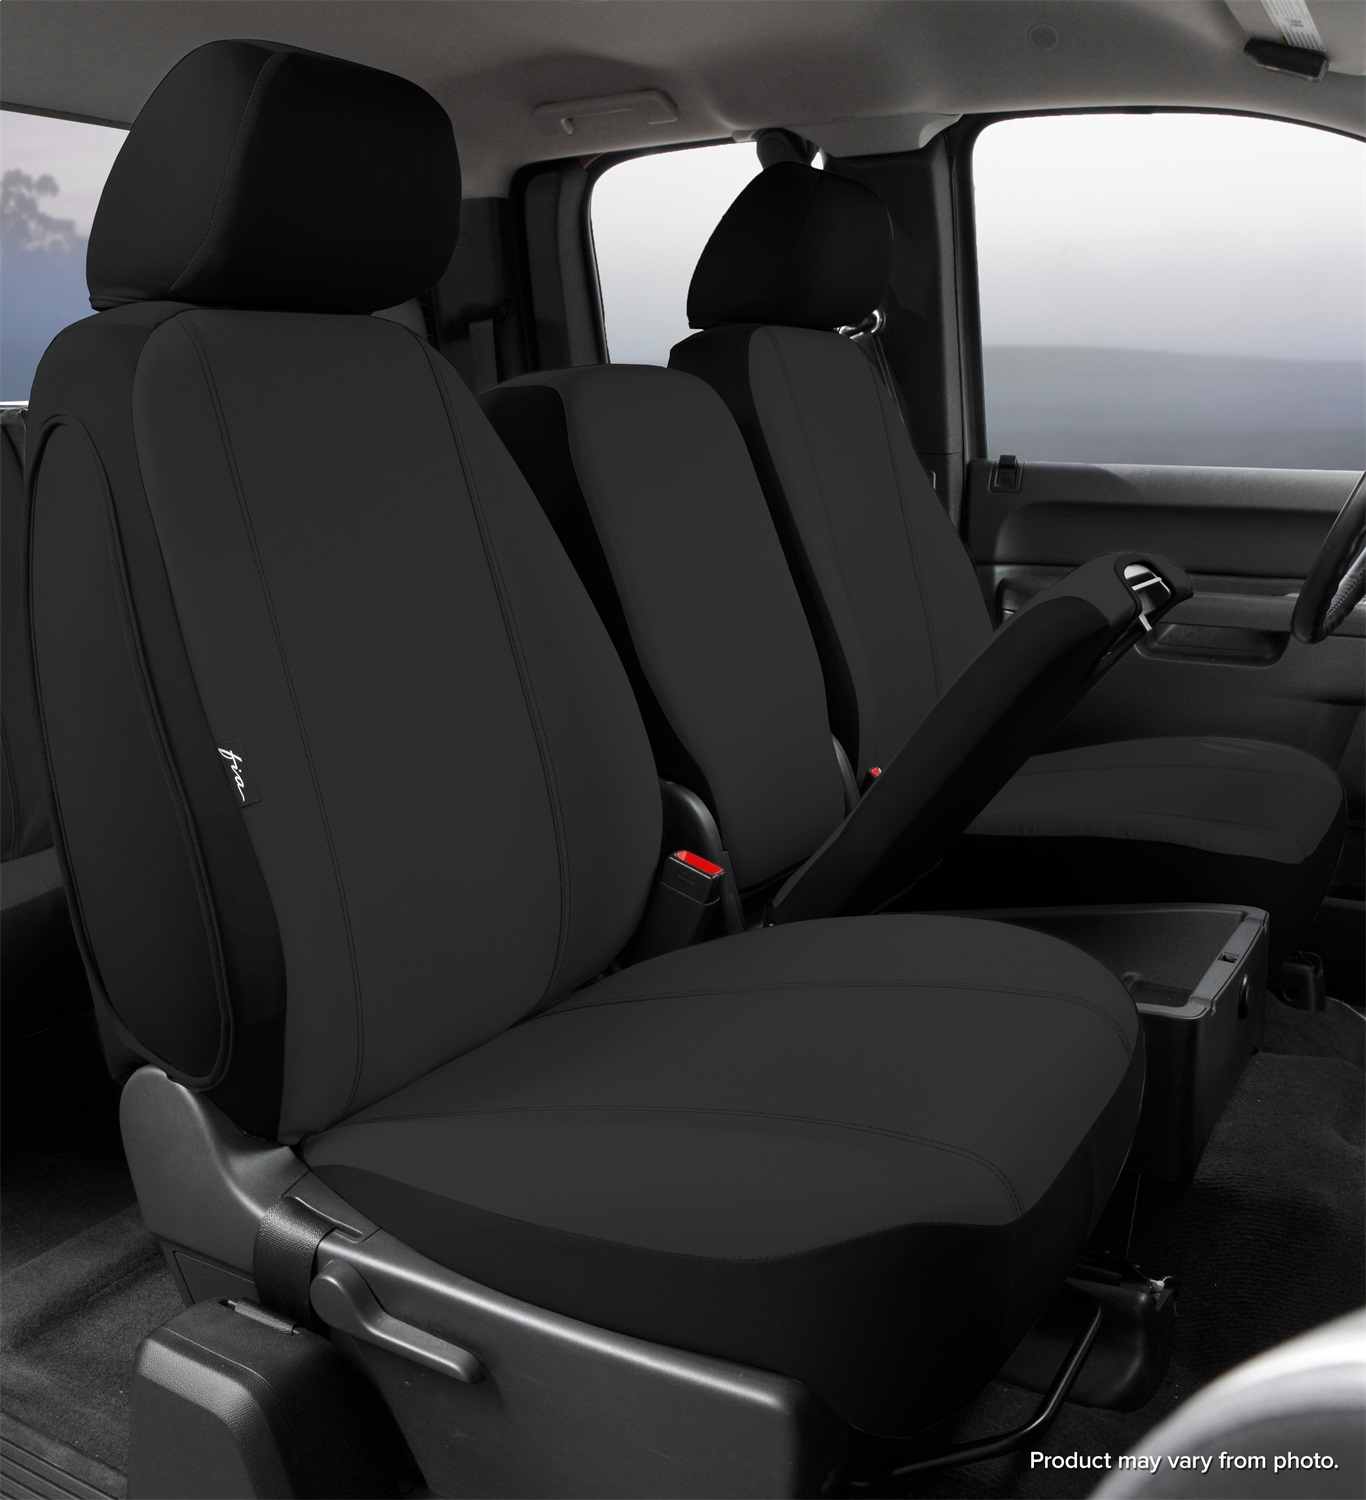 SP87-28 BLACK Fia Seat Cover 40/20/40 Split Bench With Adjustable